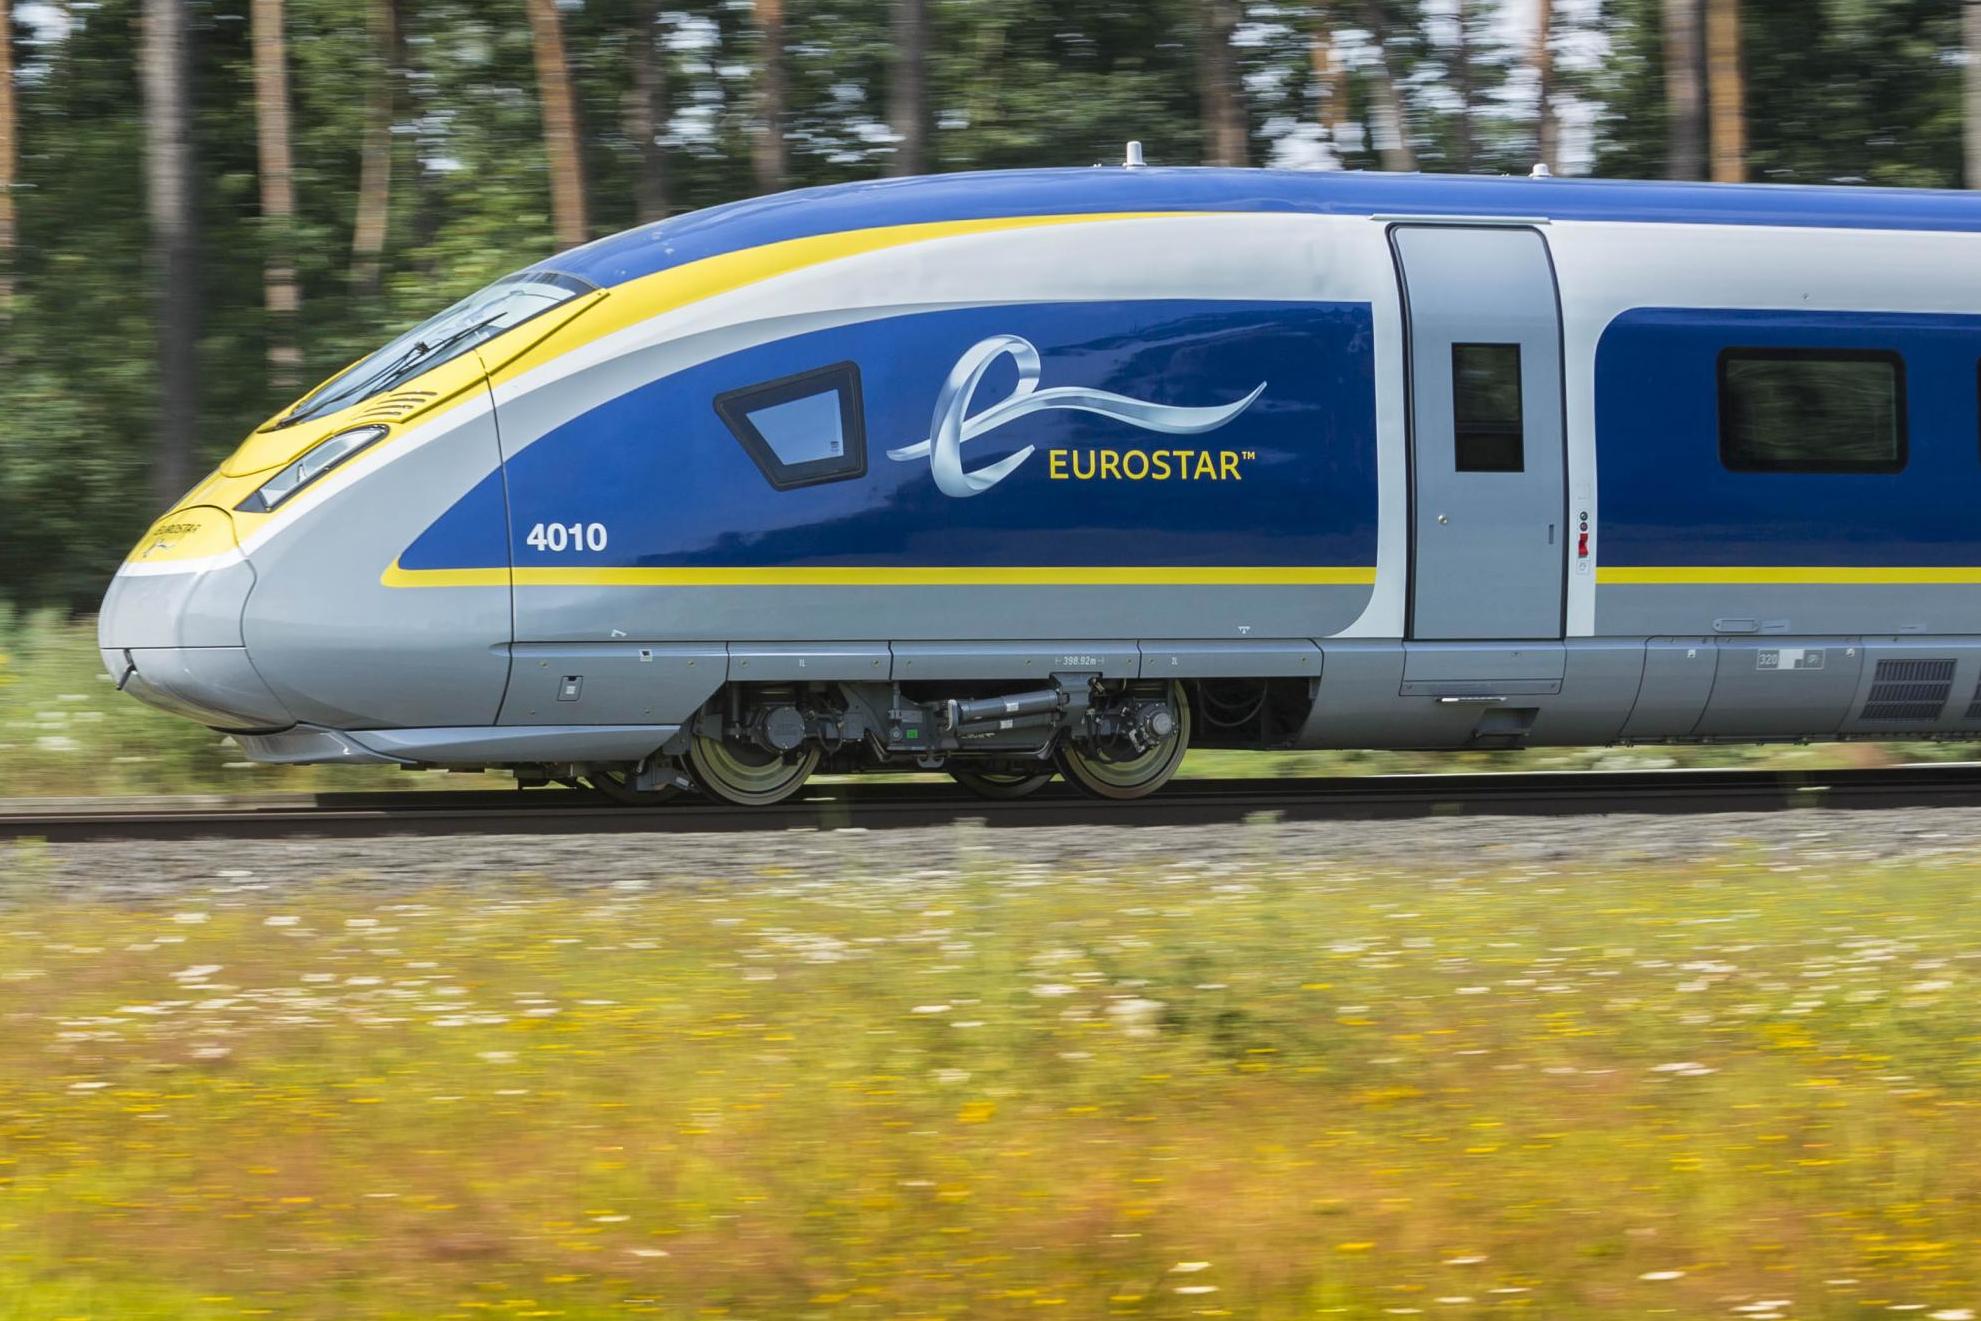 Eurostar has cancelled 78 trains over four days